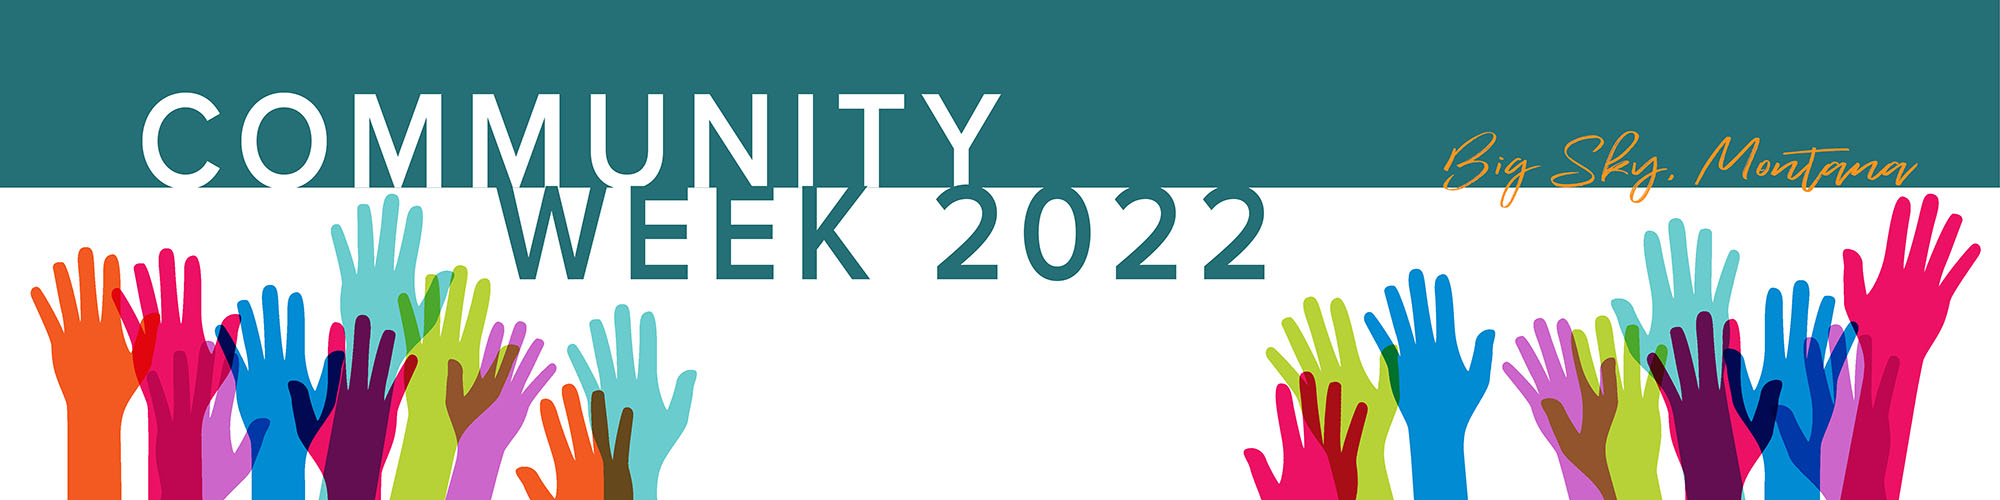 Community Week 2022 Banner